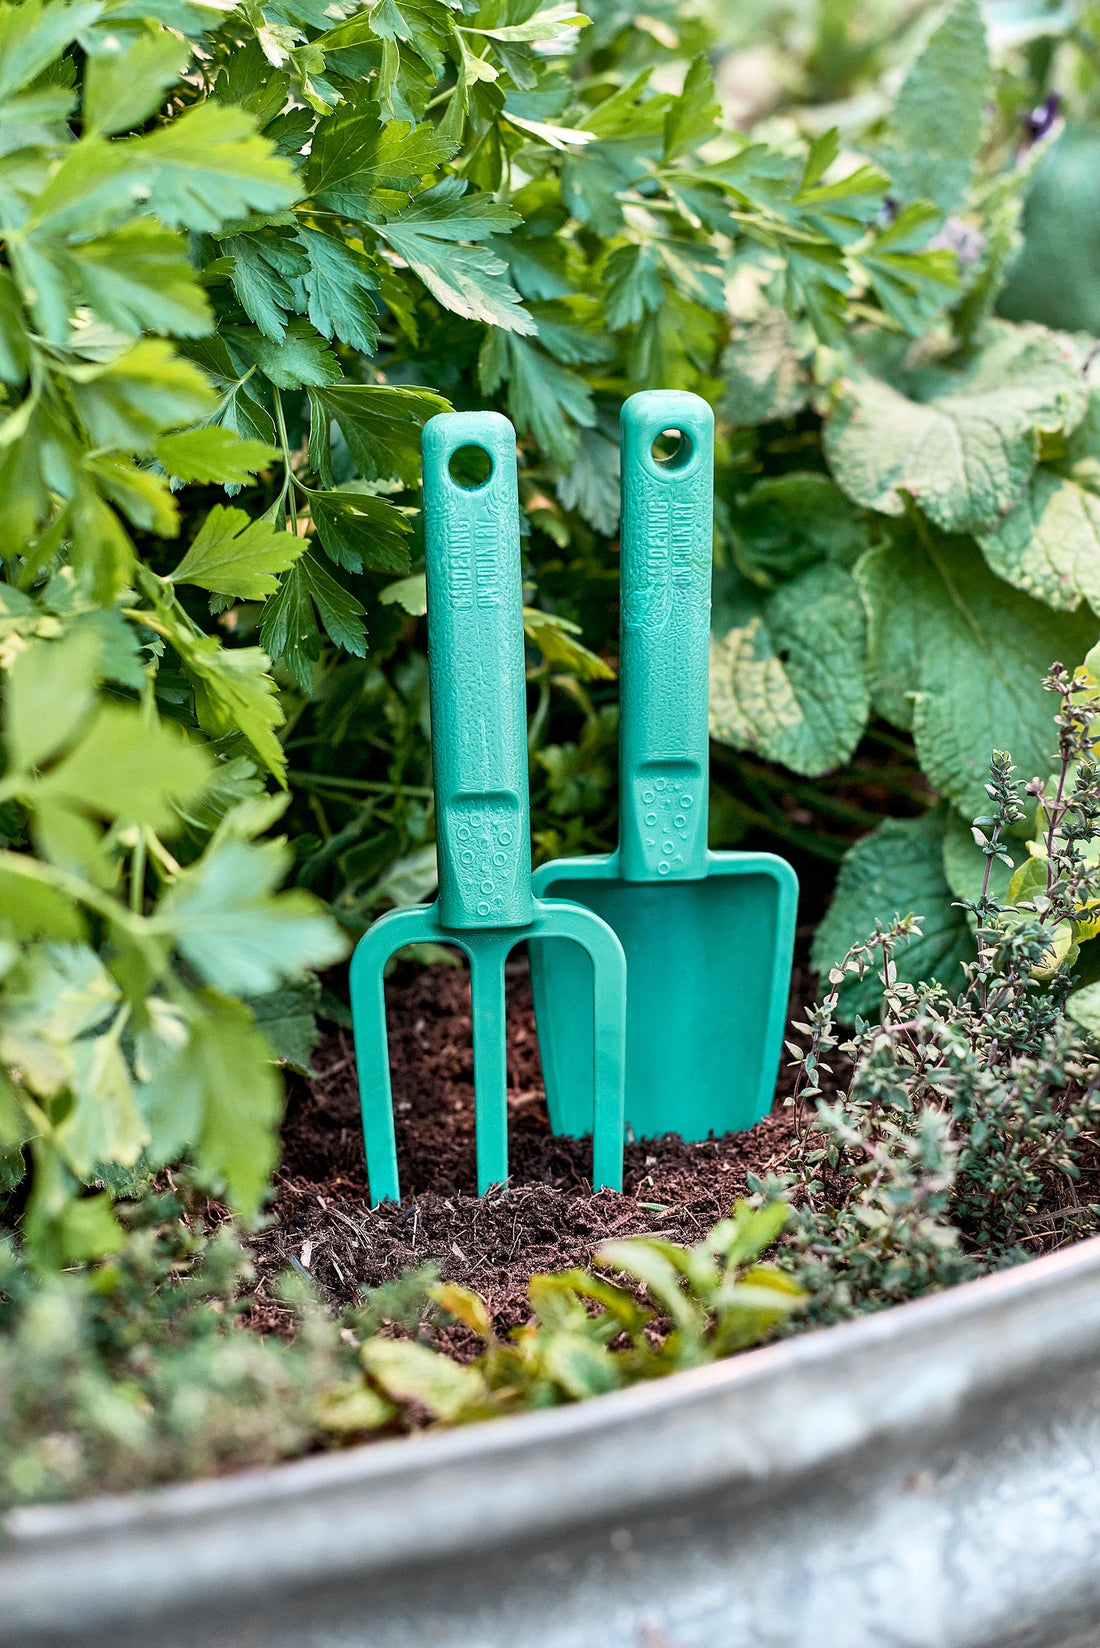 Recycled Plastic Garden Tools - Trowel - Fork - Green